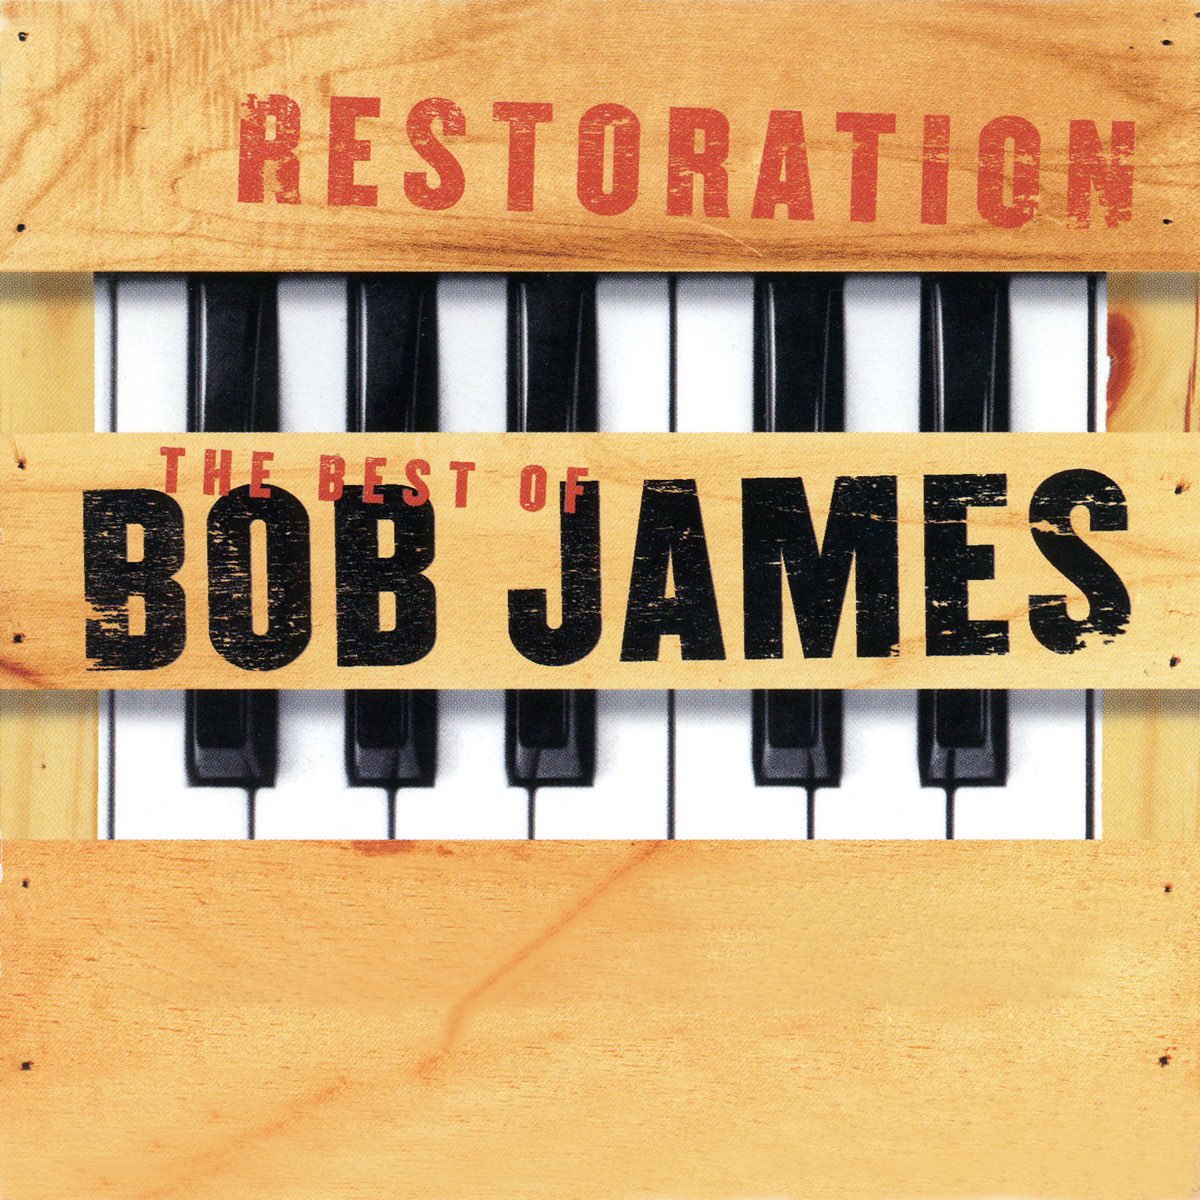 ‎Restoration The Best of Bob James by Bob James on Apple Music